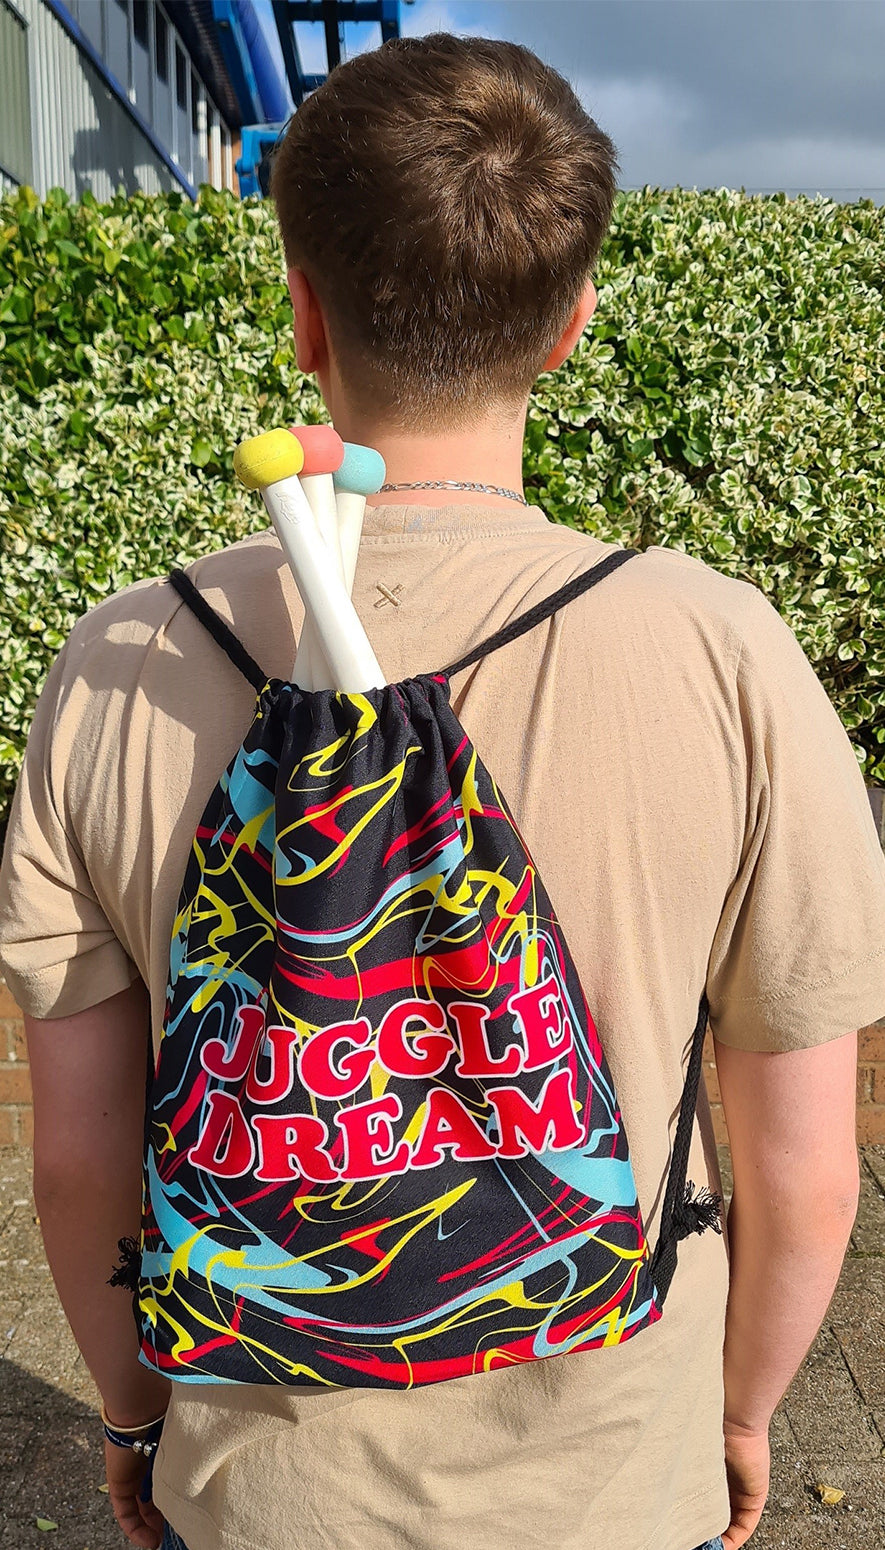 Juggle Dream drawstring bag on man's back